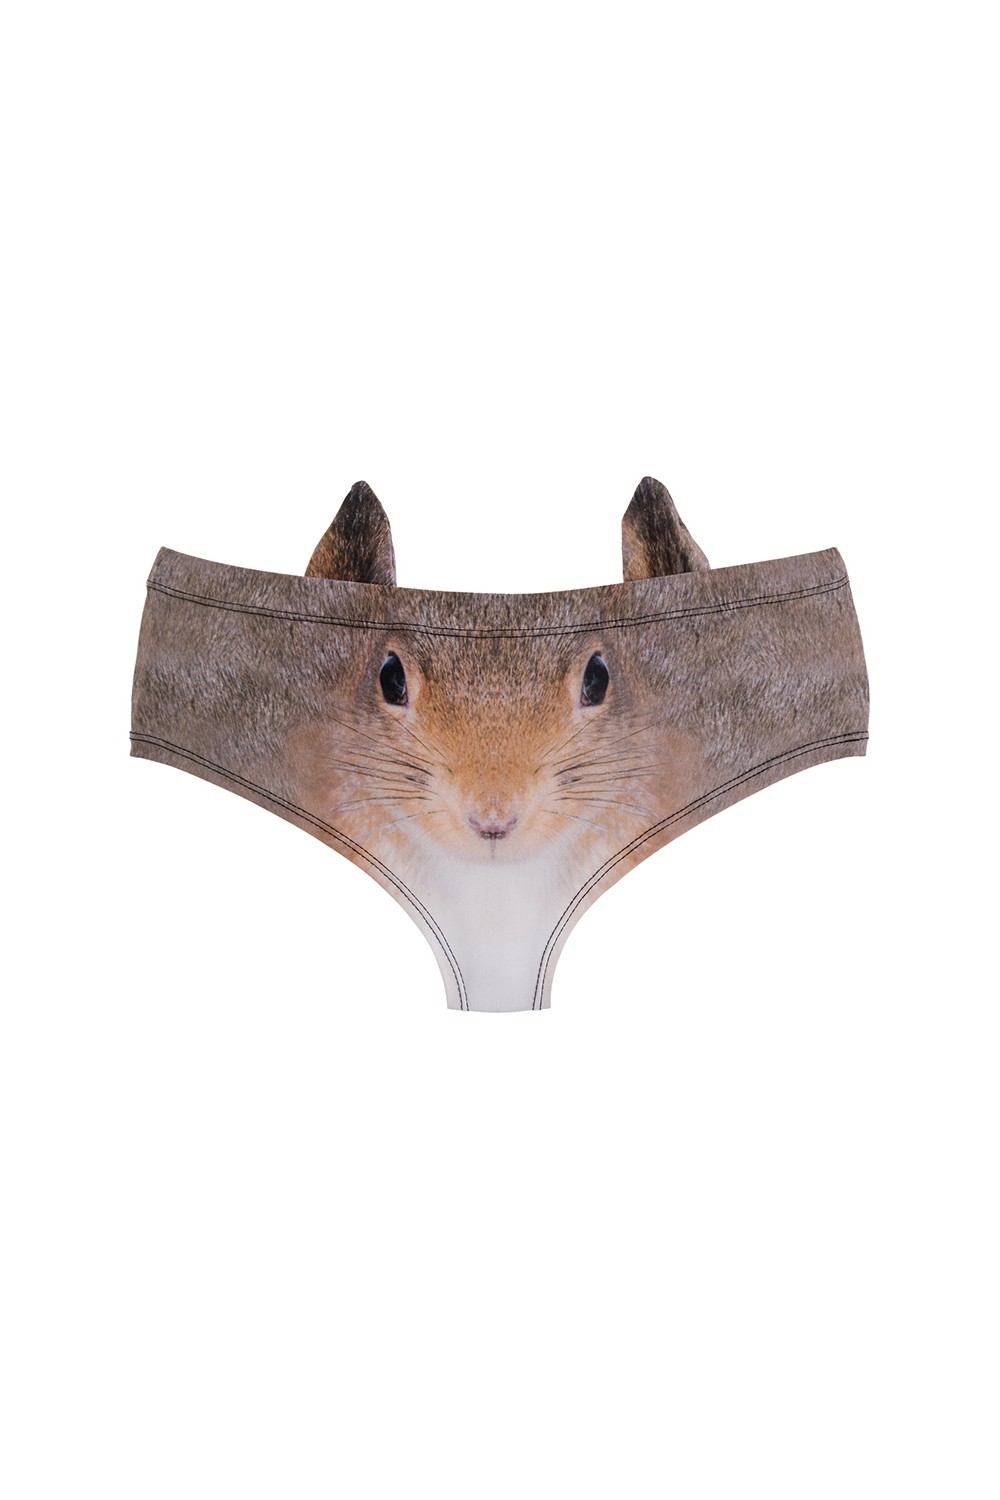 https://g2to.com/28449-thickbox/3d-squirrel-panties.jpg